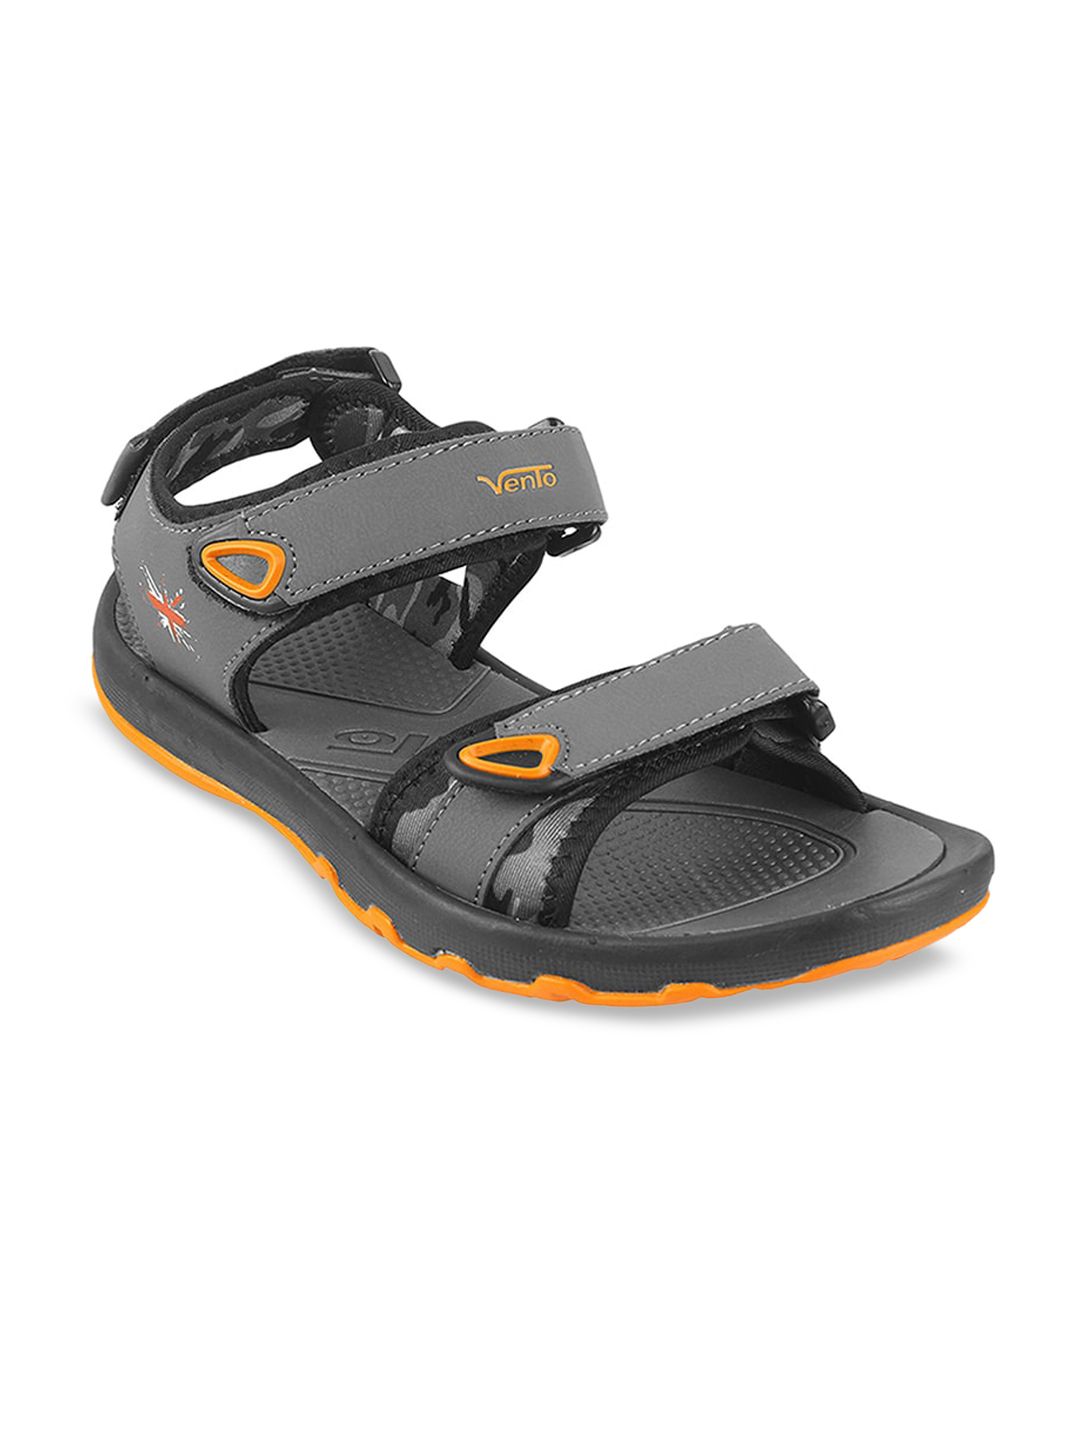 Vento Unisex Grey & Orange Sports Sandals Price in India